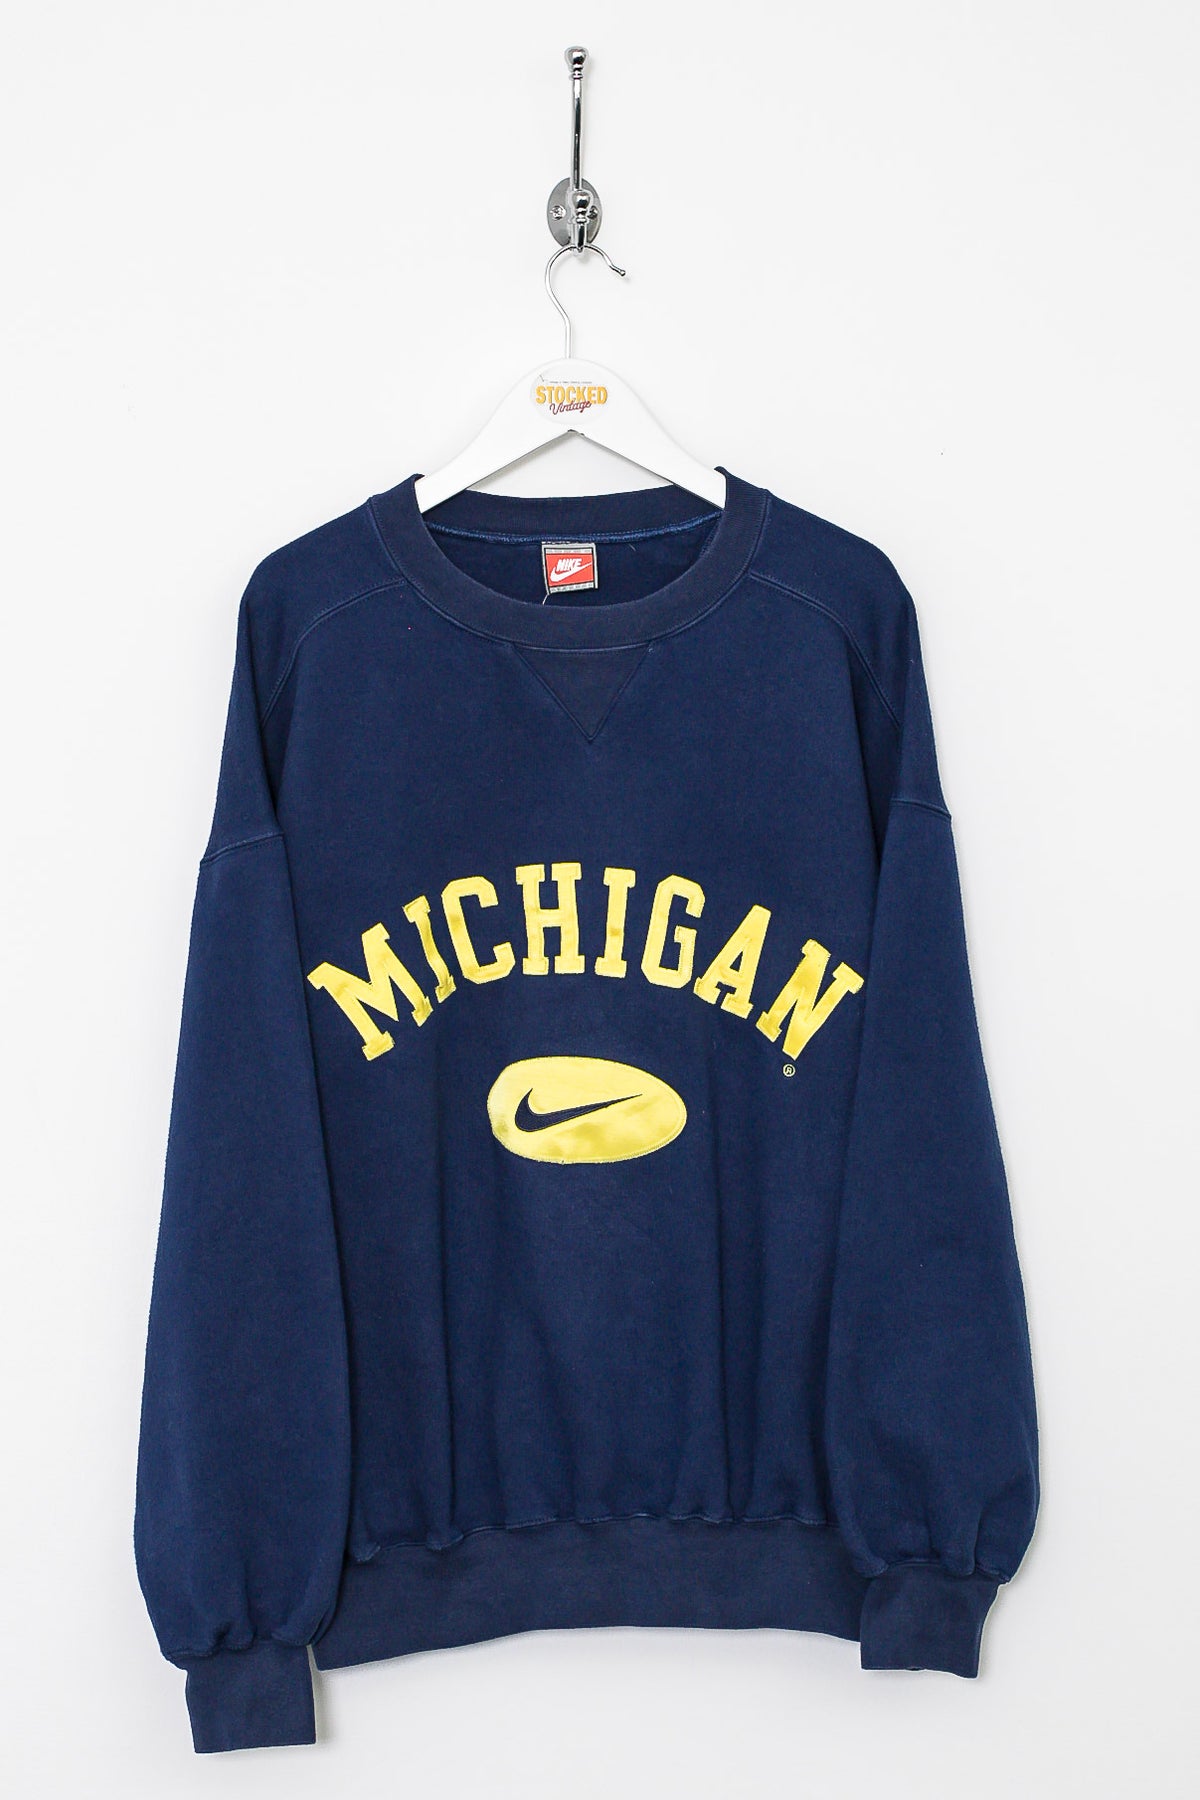 00s Nike Michigan Sweatshirt (L)